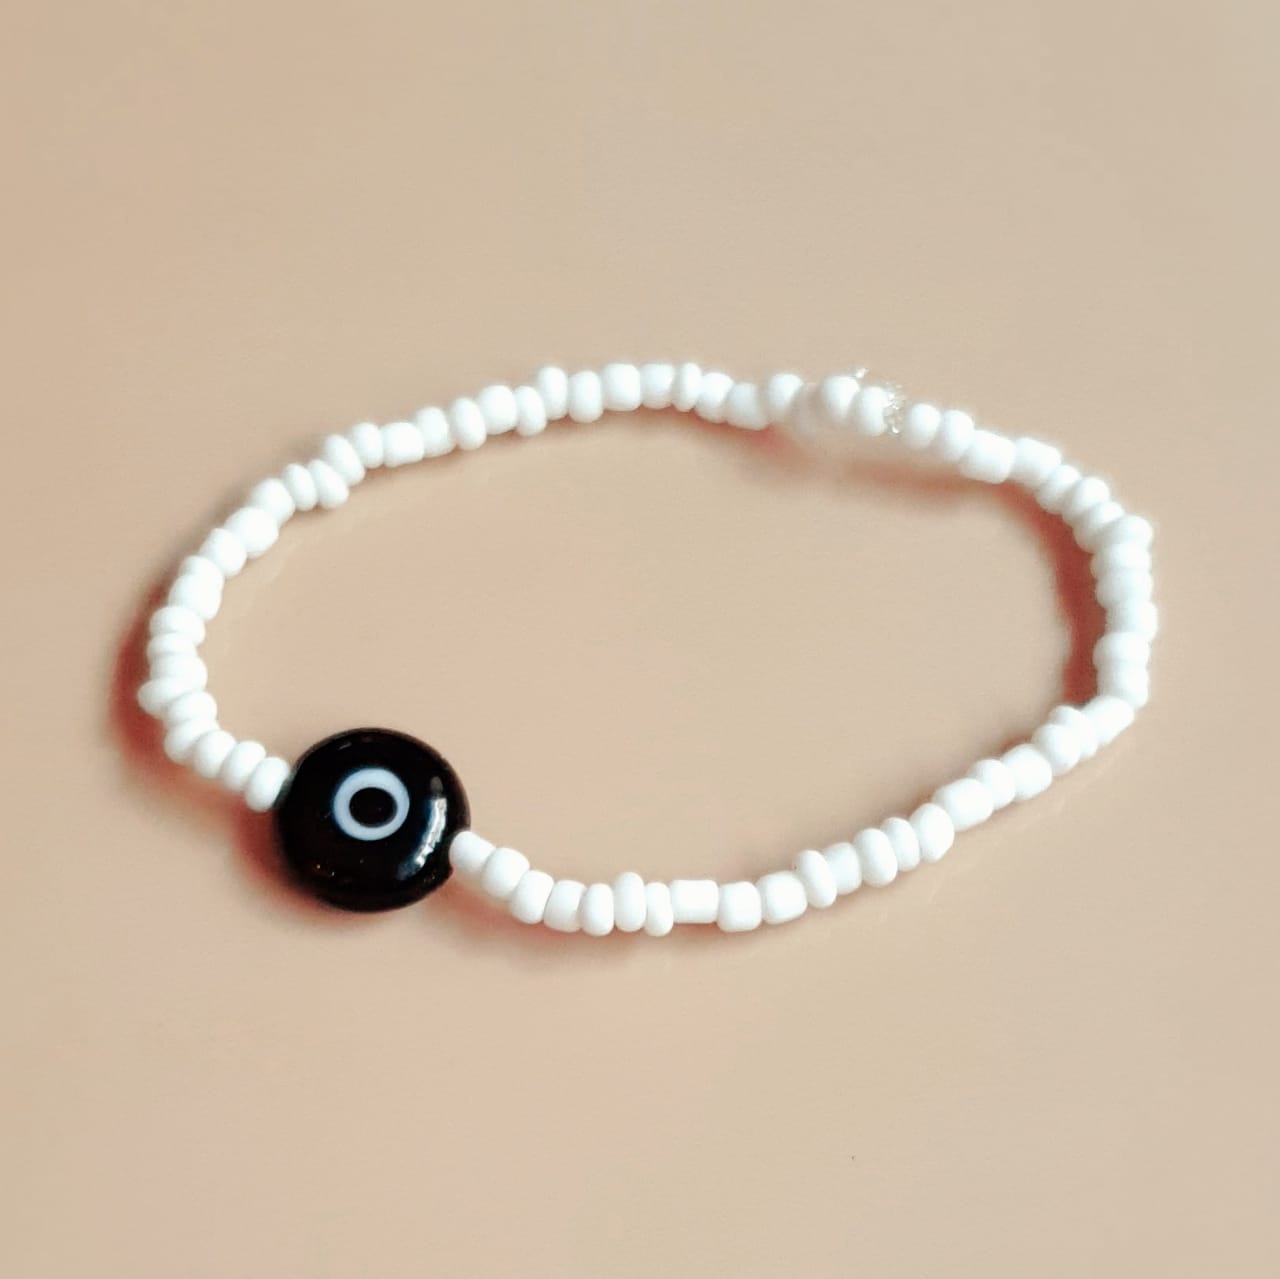 ATM Evil Eye Bracelet, Flat Black Evil Eye with White Beads for Good Luck and Prosperity, Nazariya, Nazar Battu , Flexi Cord (1 Piece) (Black Evil Eye - Power and Protection)